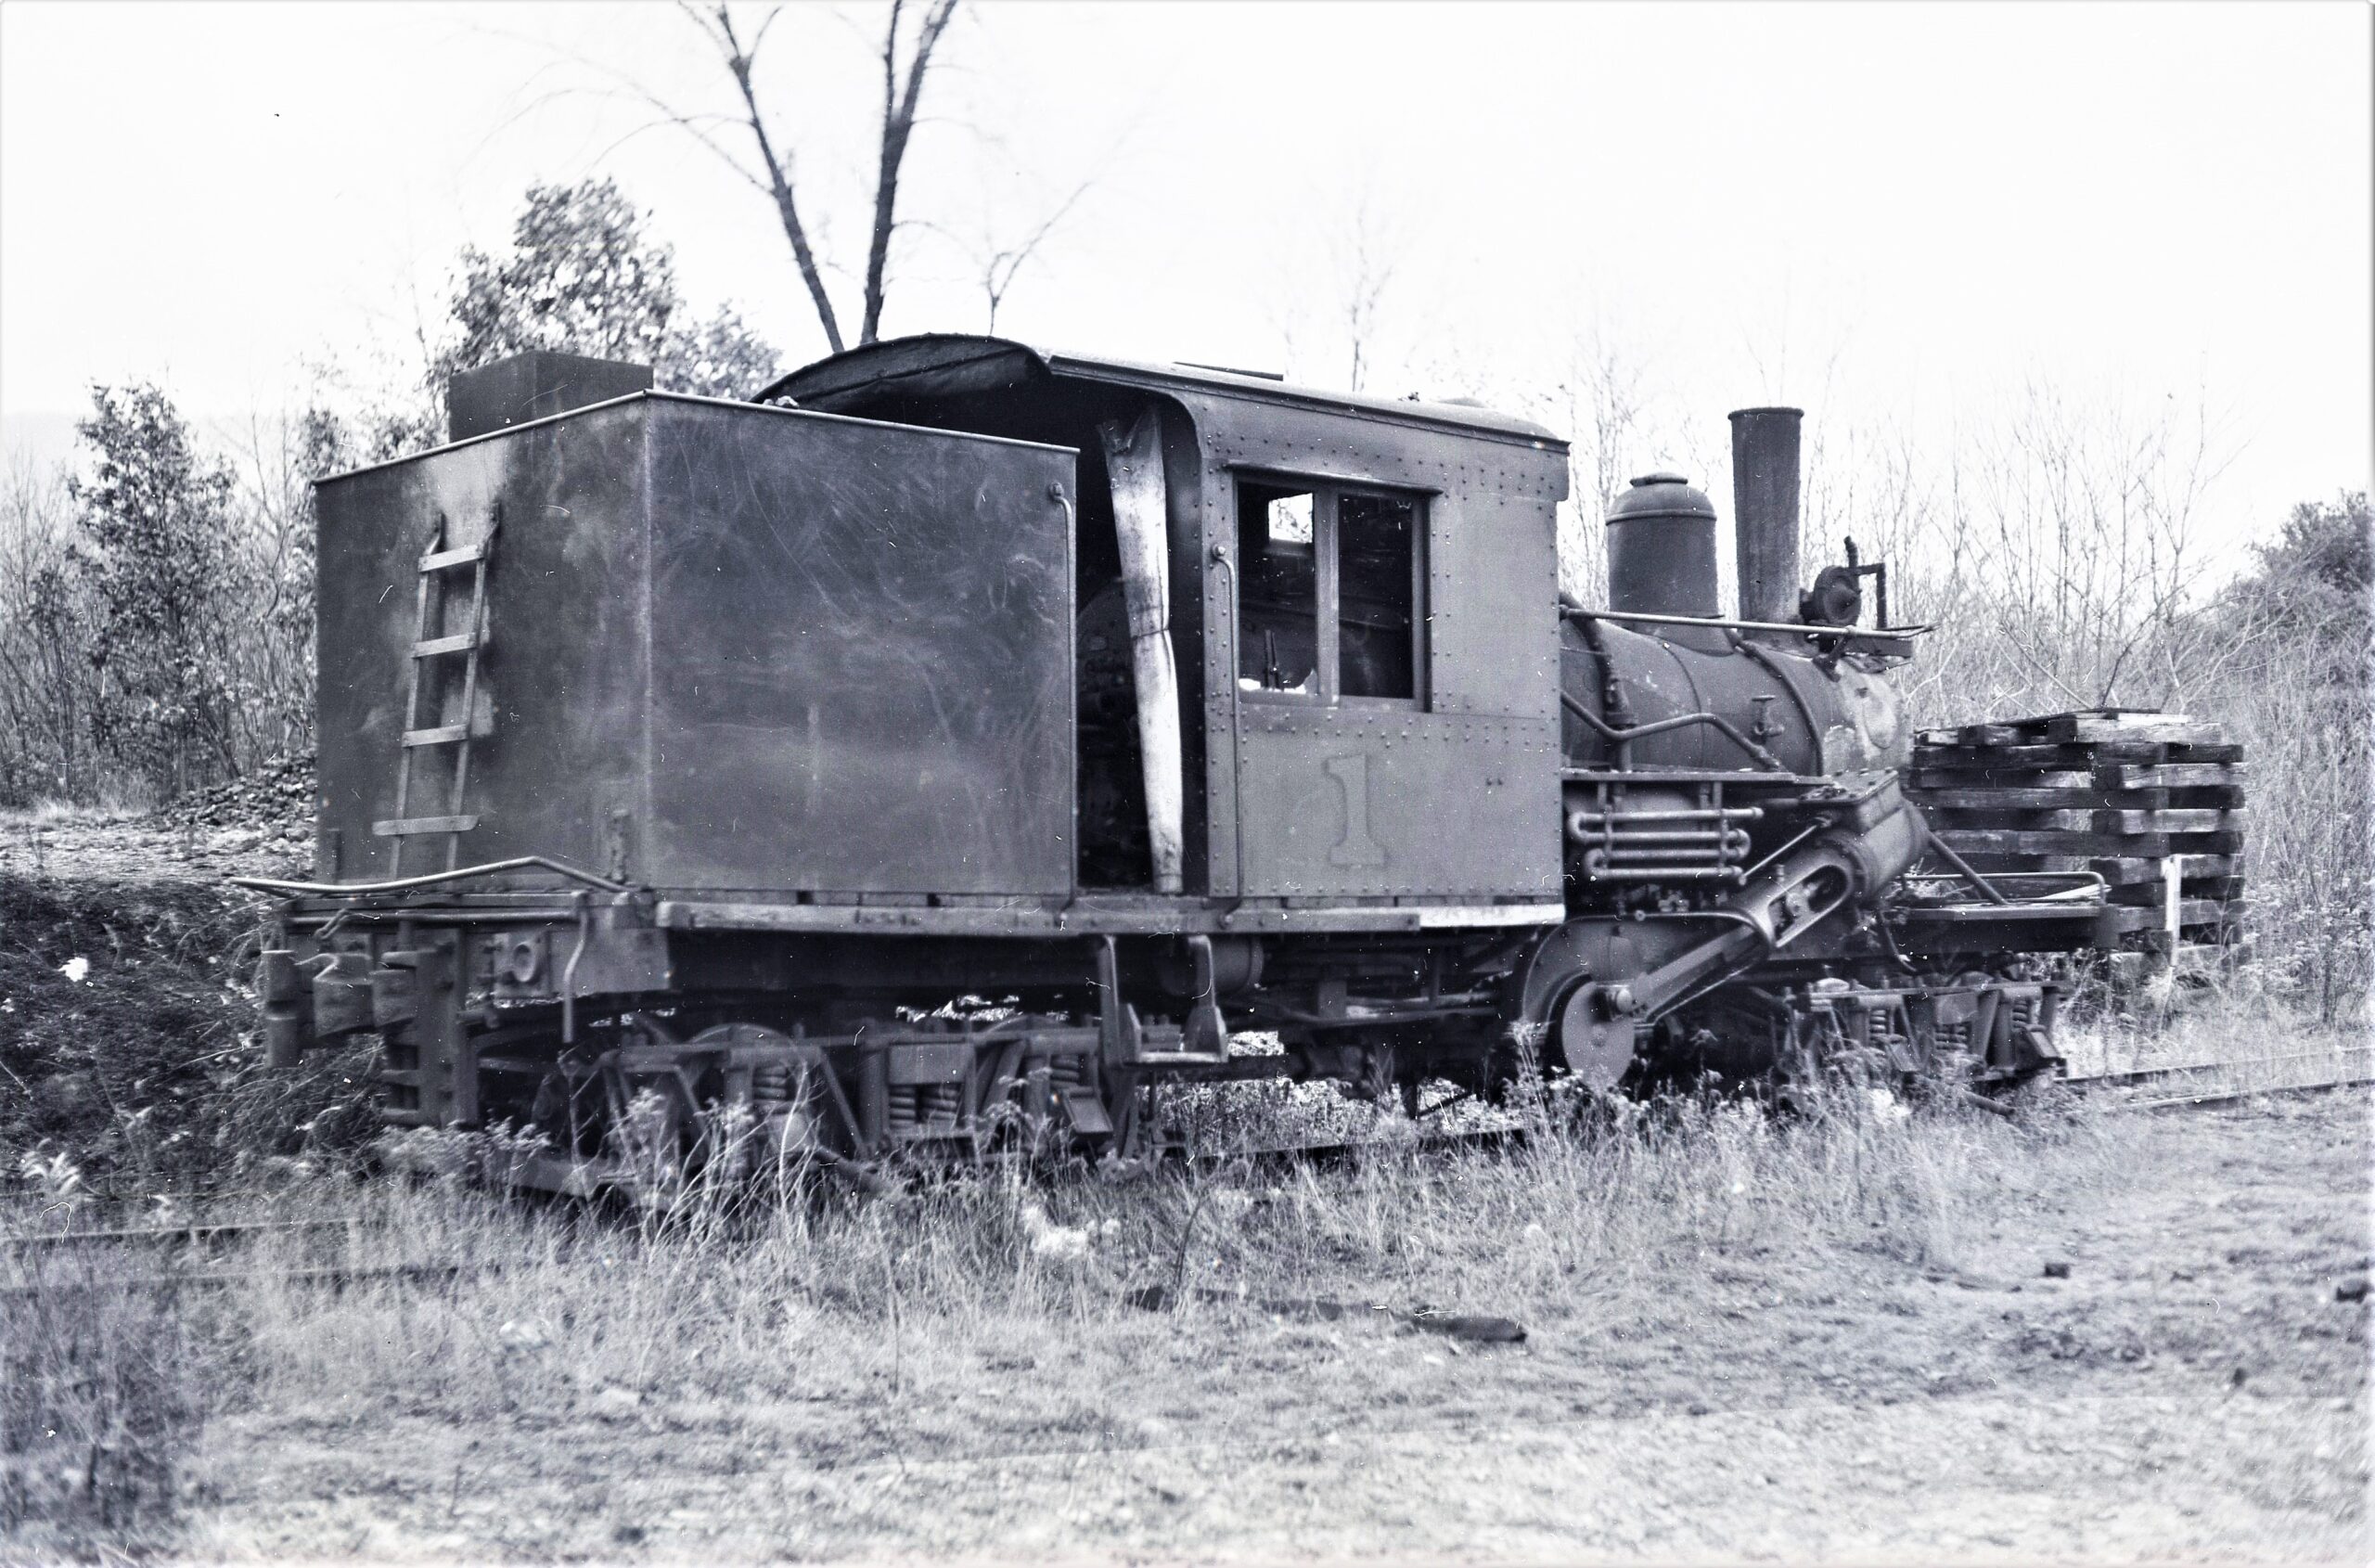 Southern New York Railway | Oneonta, New York | Climax steam locomotive #1 | November 1957 | Fielding Lew Bowman Photograph